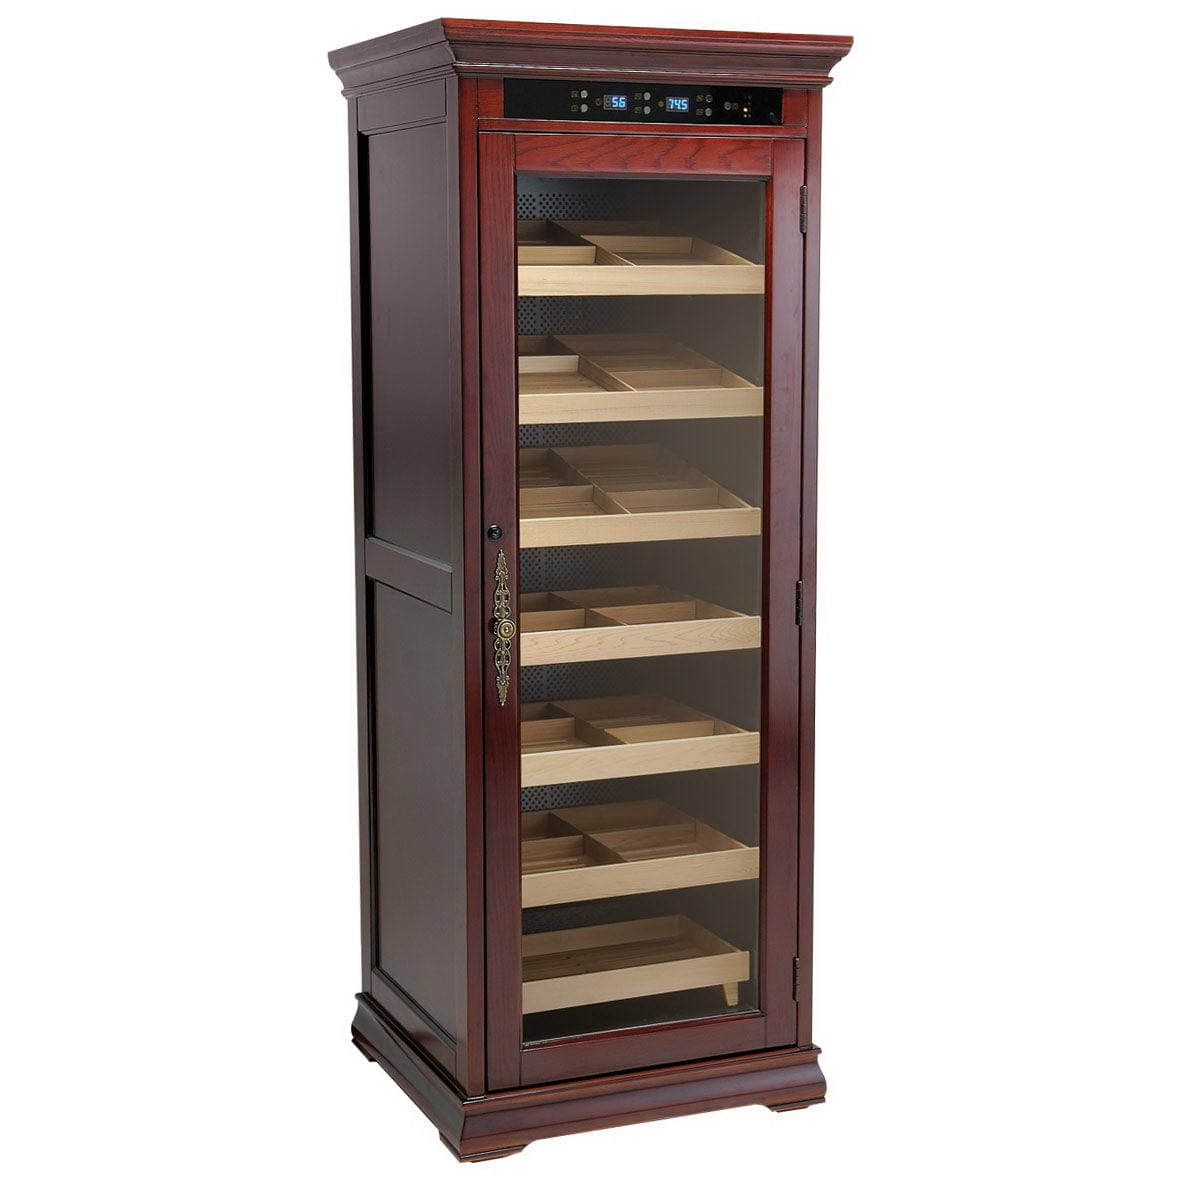 The Remington Electric Cabinet Cigar Humidor Cigar Humidors RMGTN Luxury Appliances Direct